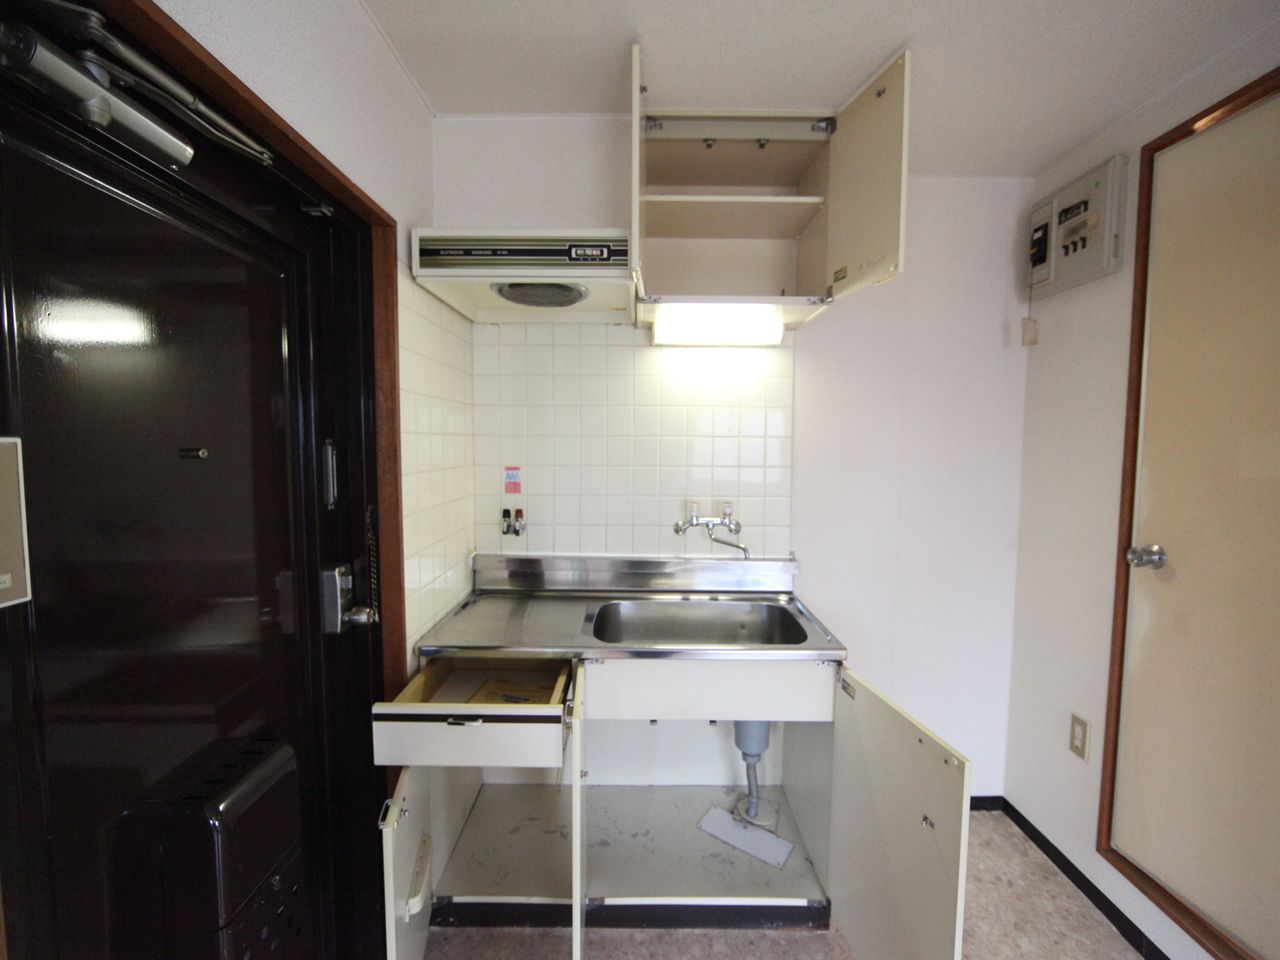 Kitchen. kitchen Two-burner gas stove installation Allowed